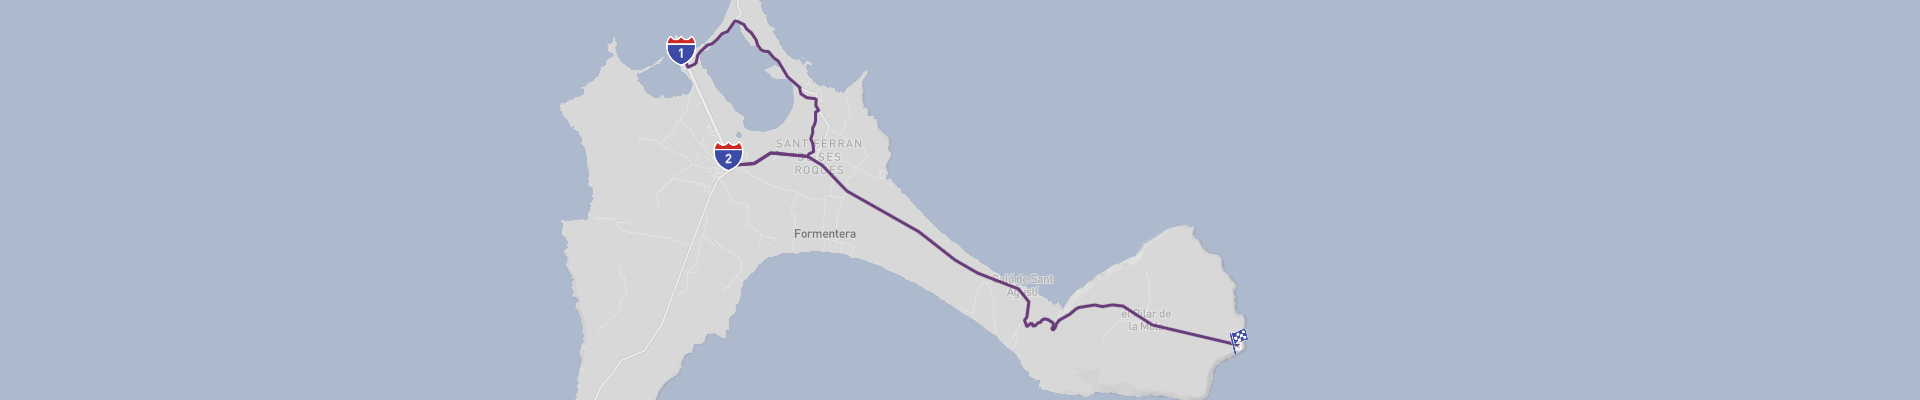 Route panoramique de Formentera